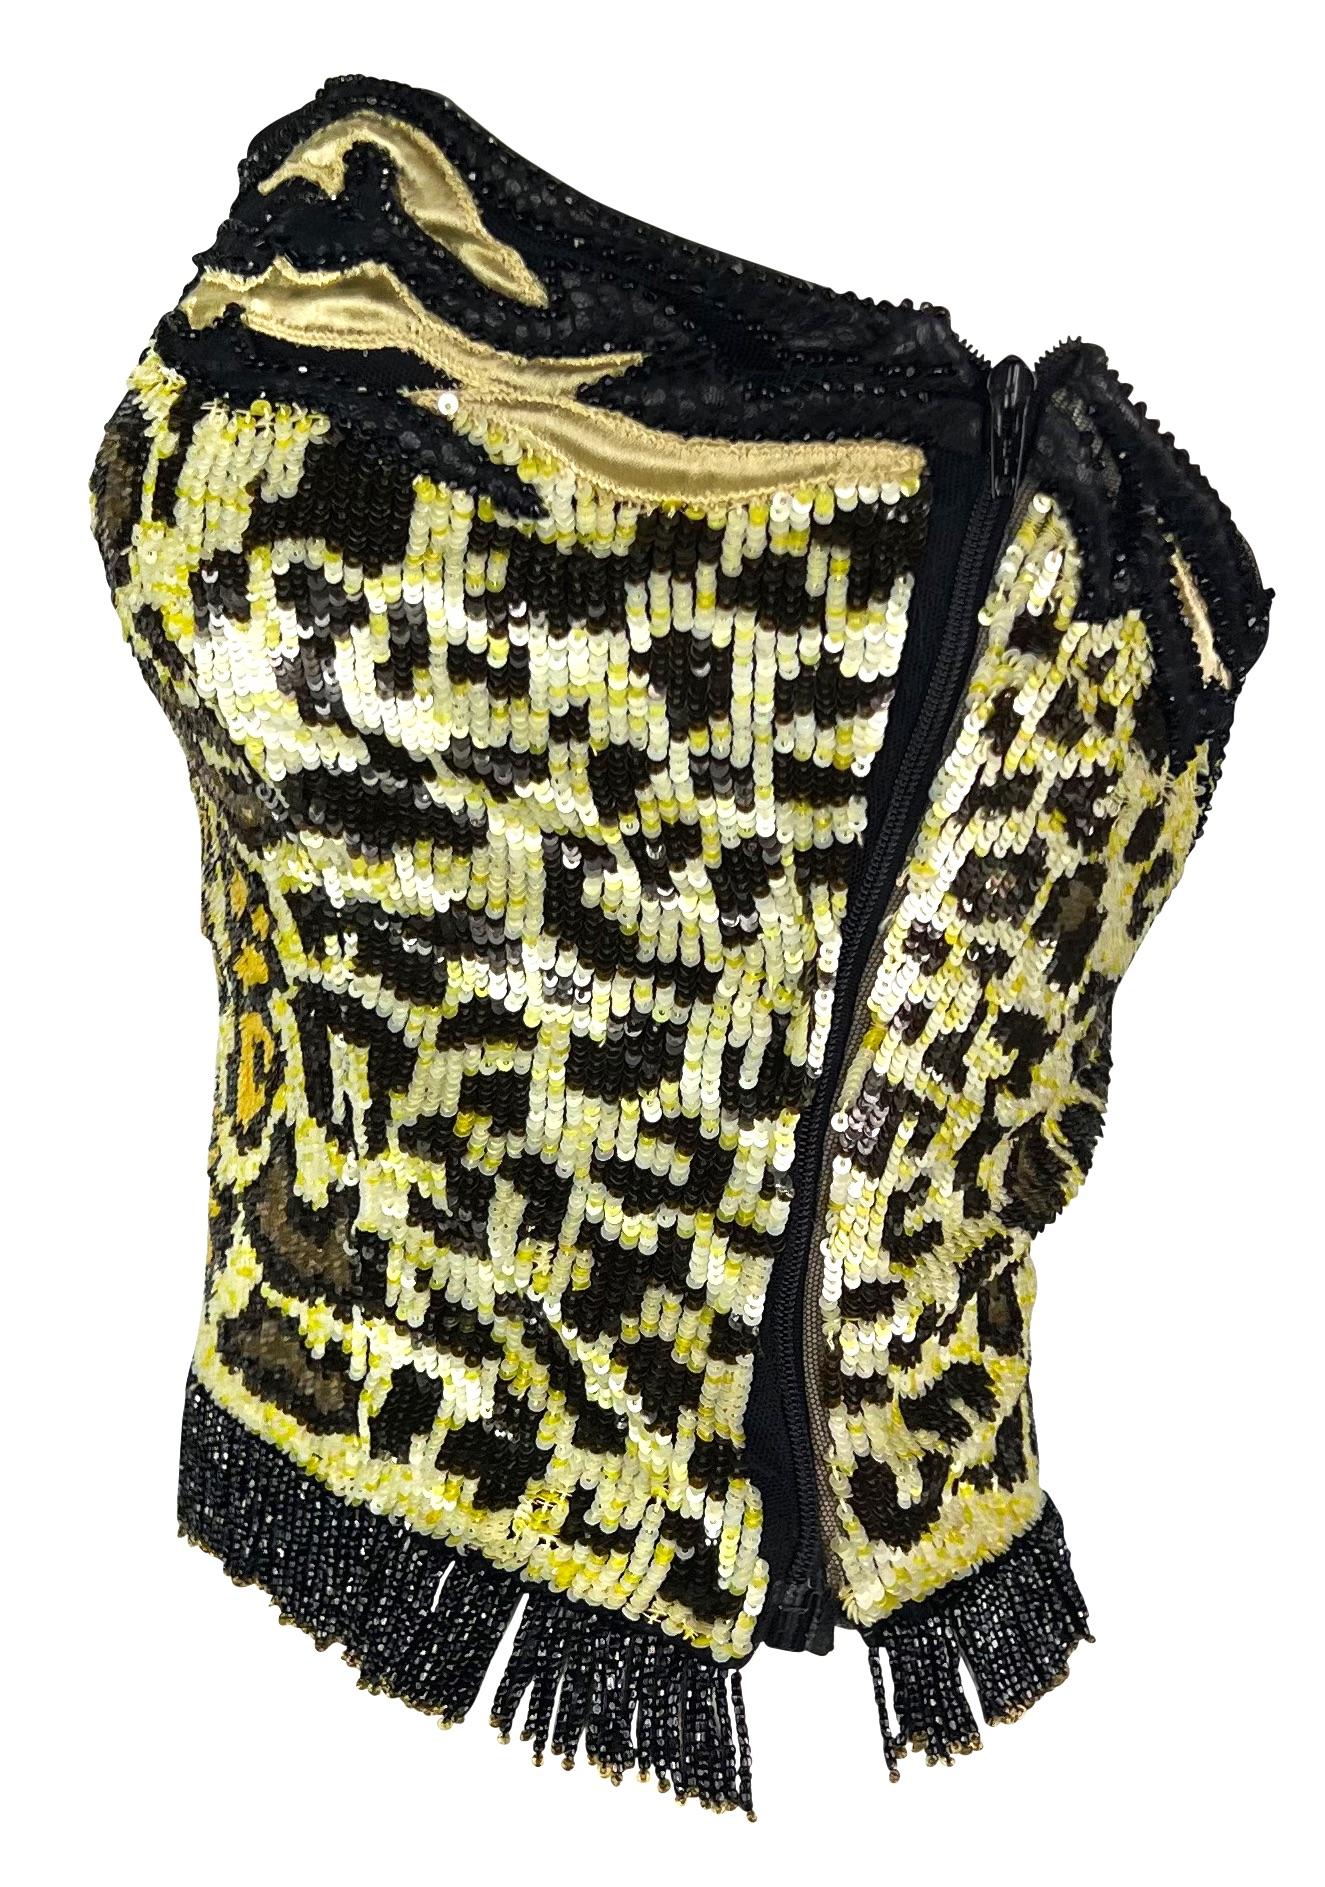 S/S 1998 Valentino Garavani Runway Ad Beaded Sequin Cheetah Print Strapless Top For Sale 6